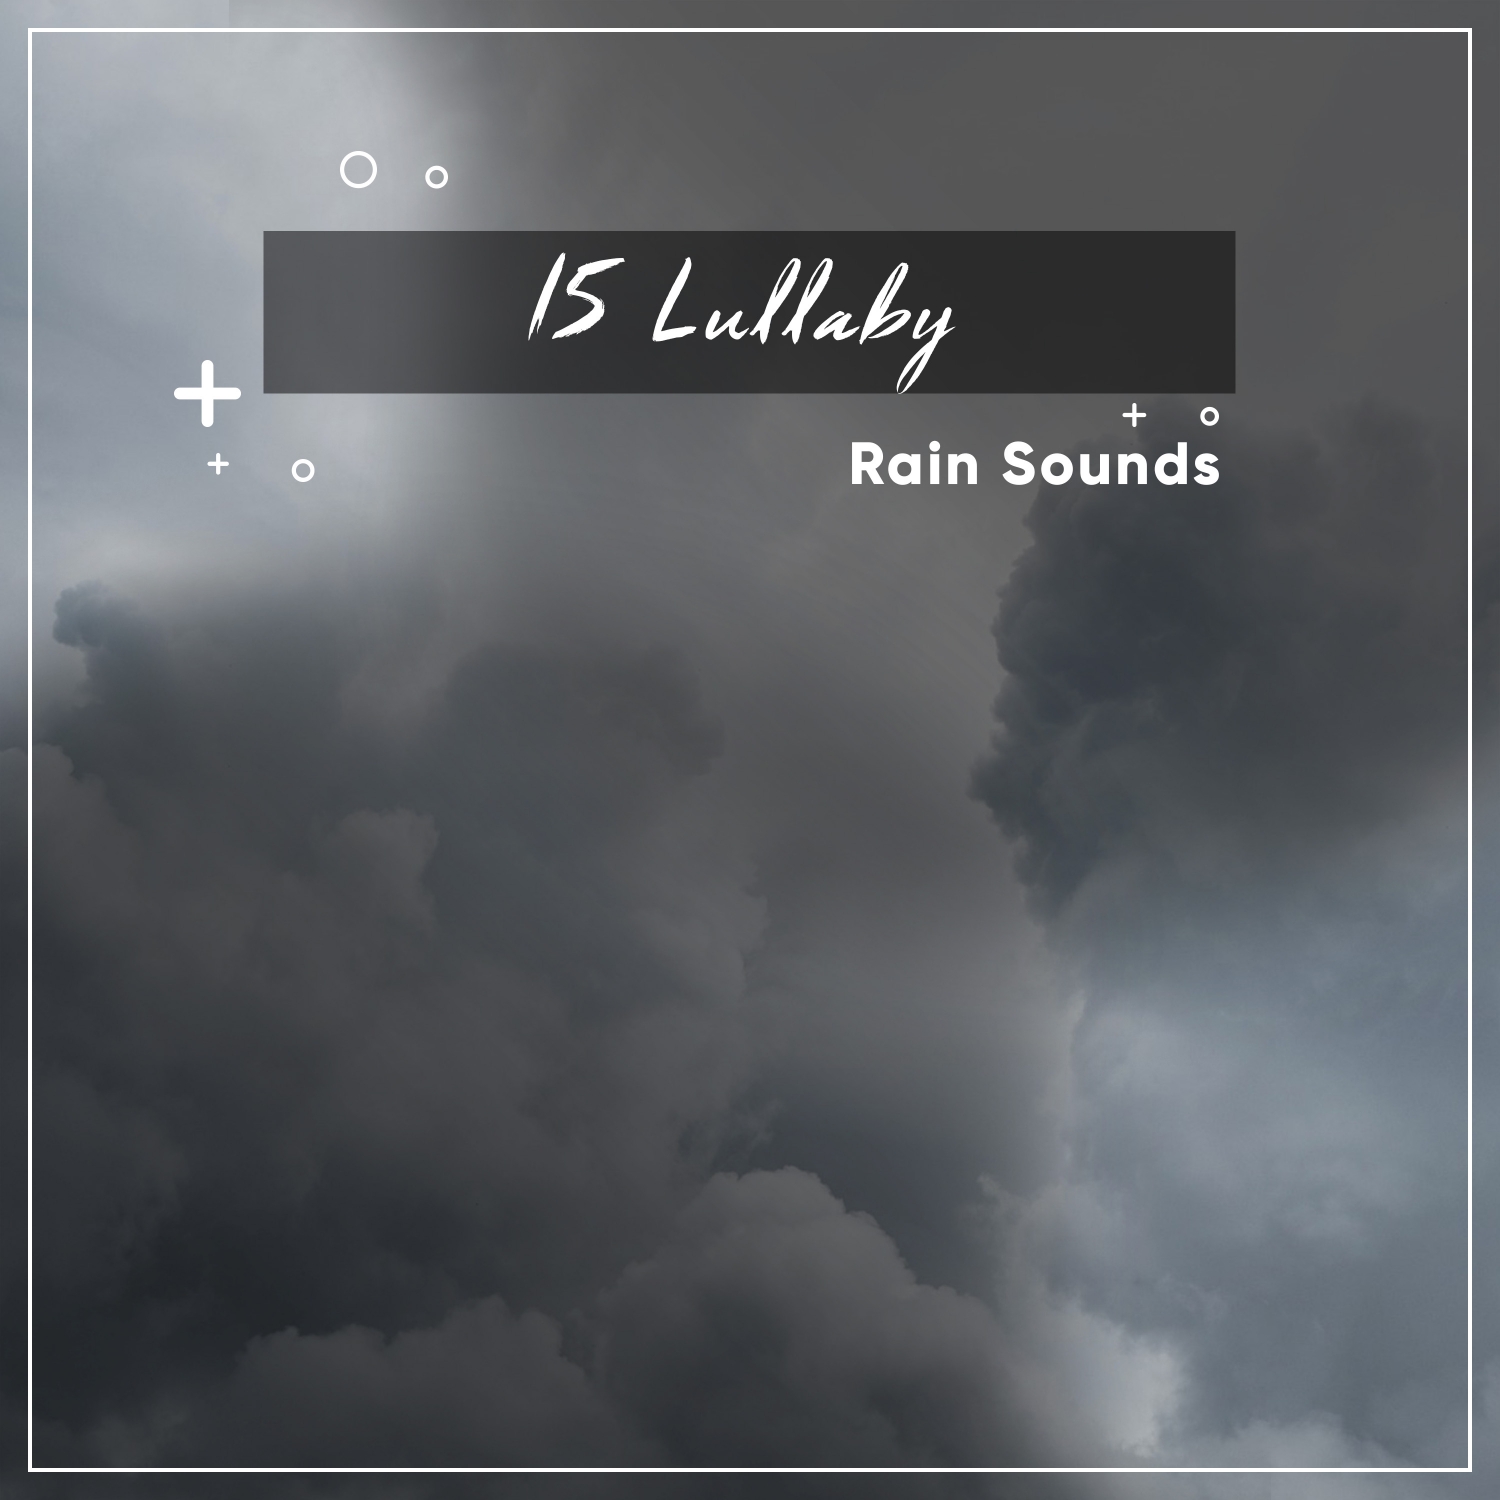 15 Lullaby Rain Sounds